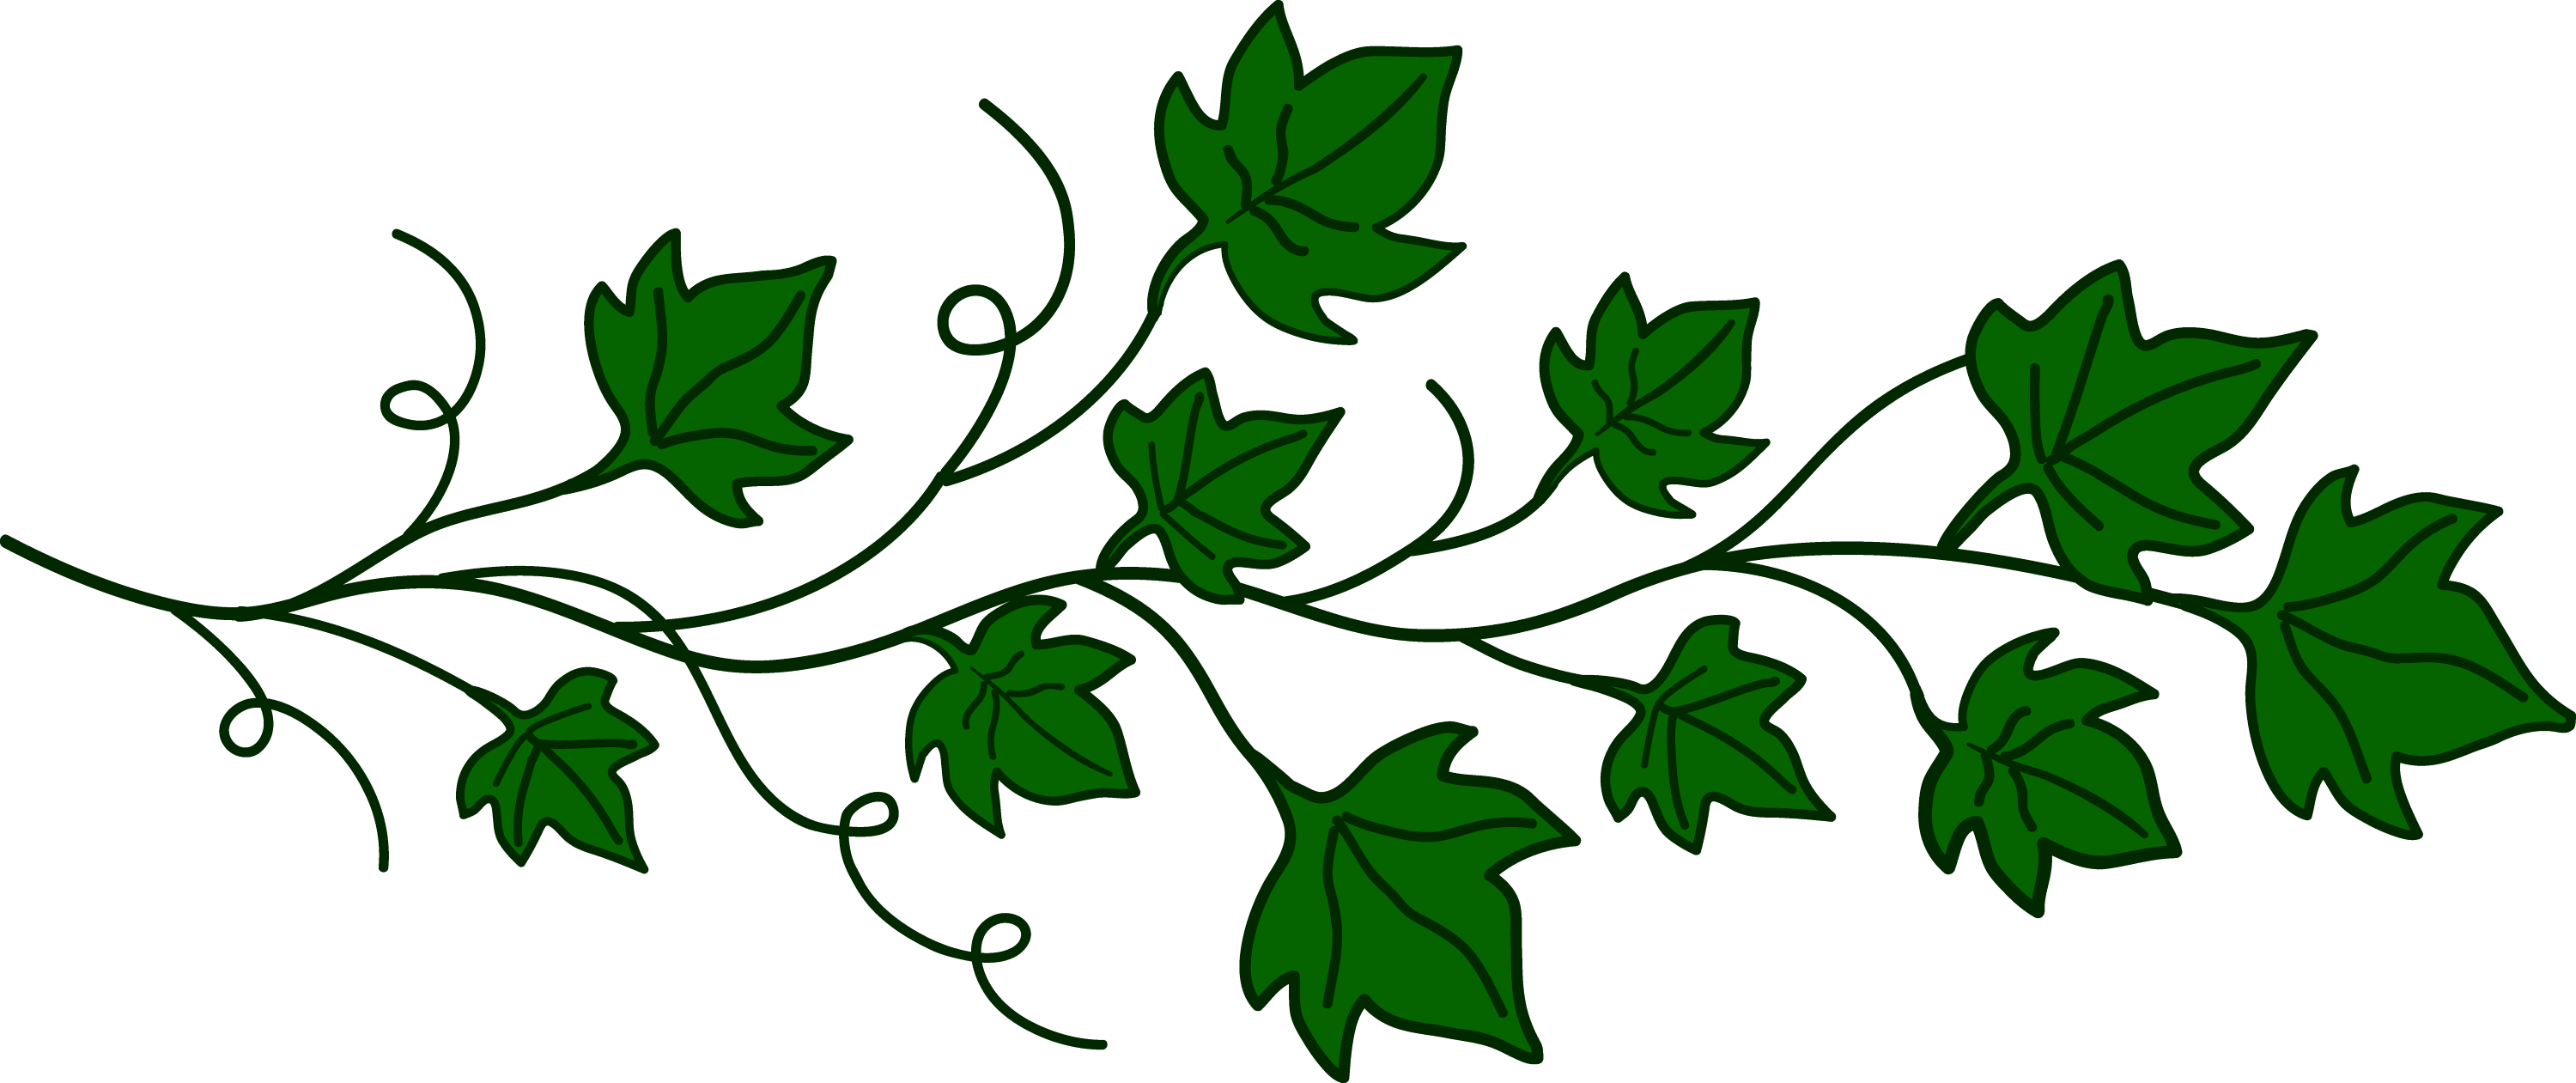 Vine of Ivy Leaves  Free Clip Art